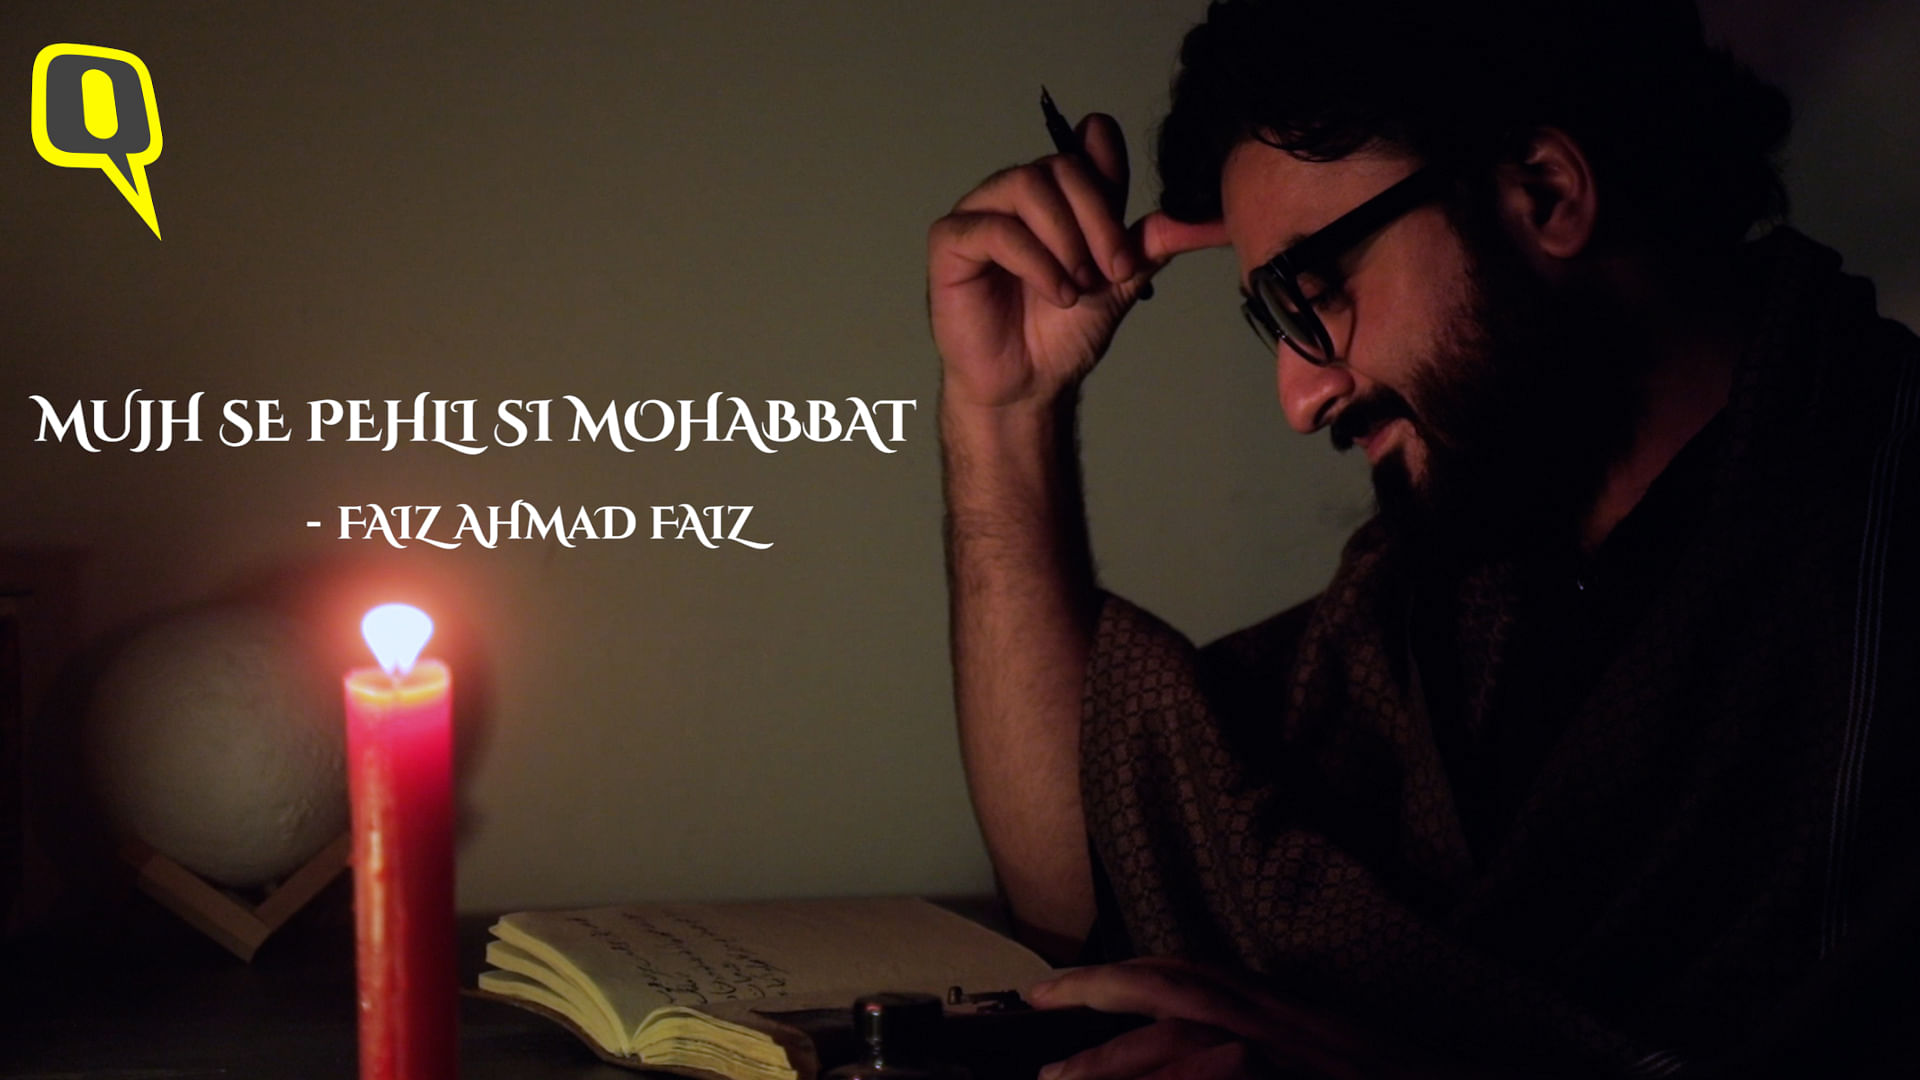 Faiz Ahmad Faiz’s ‘Mujh Se Pehli Si Mohabbat’ was originally sung by Noor Jehan on the request of the poet himself.